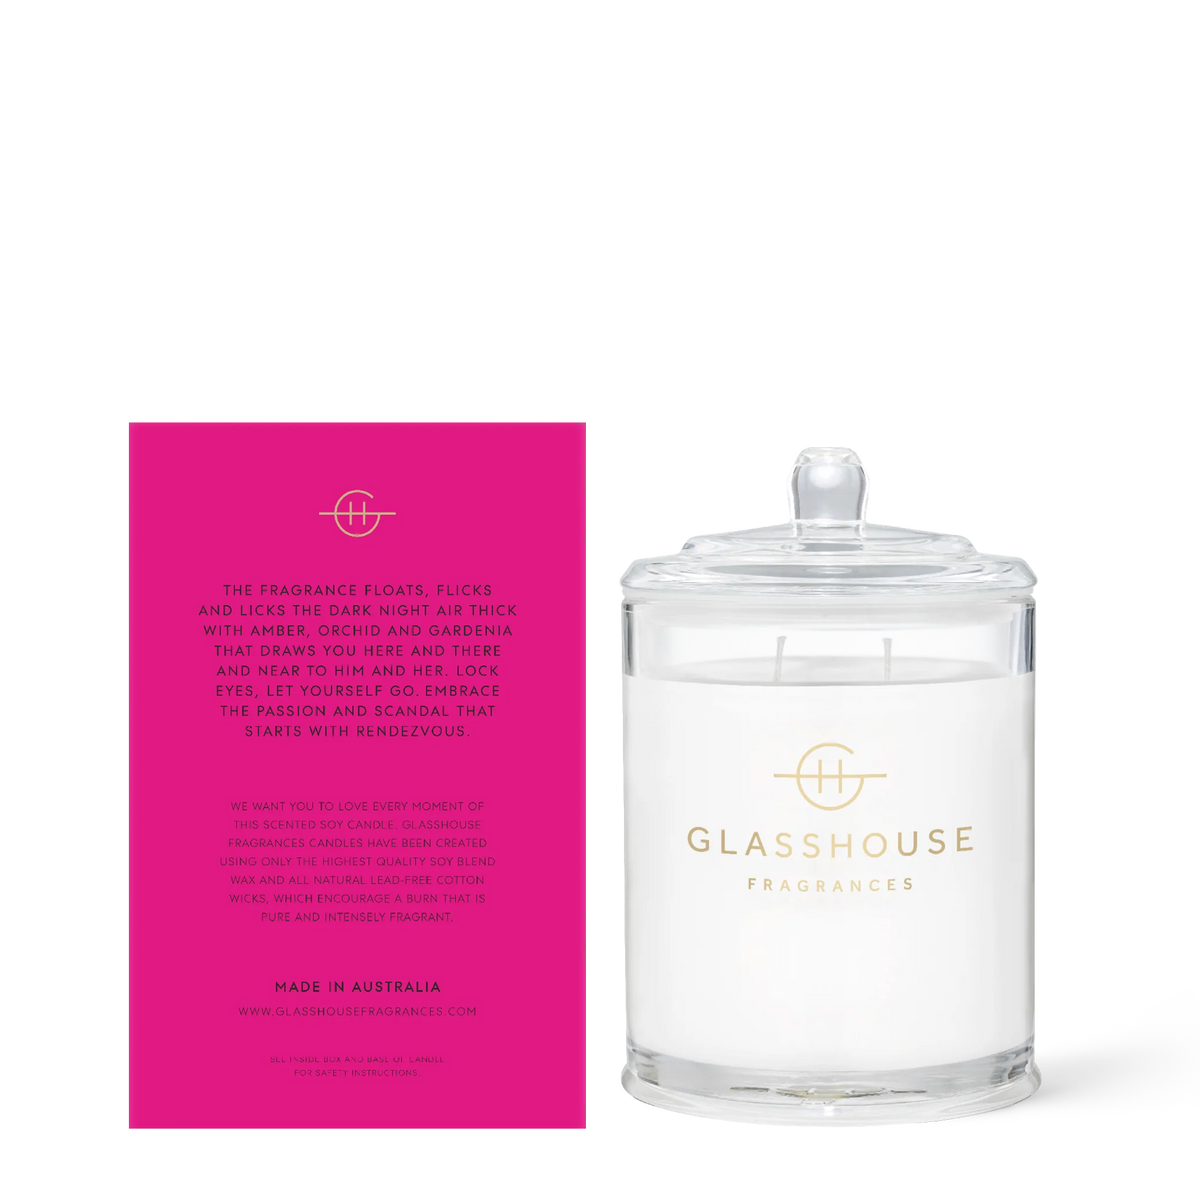 glasshouse fragrances | 380g rendezvous